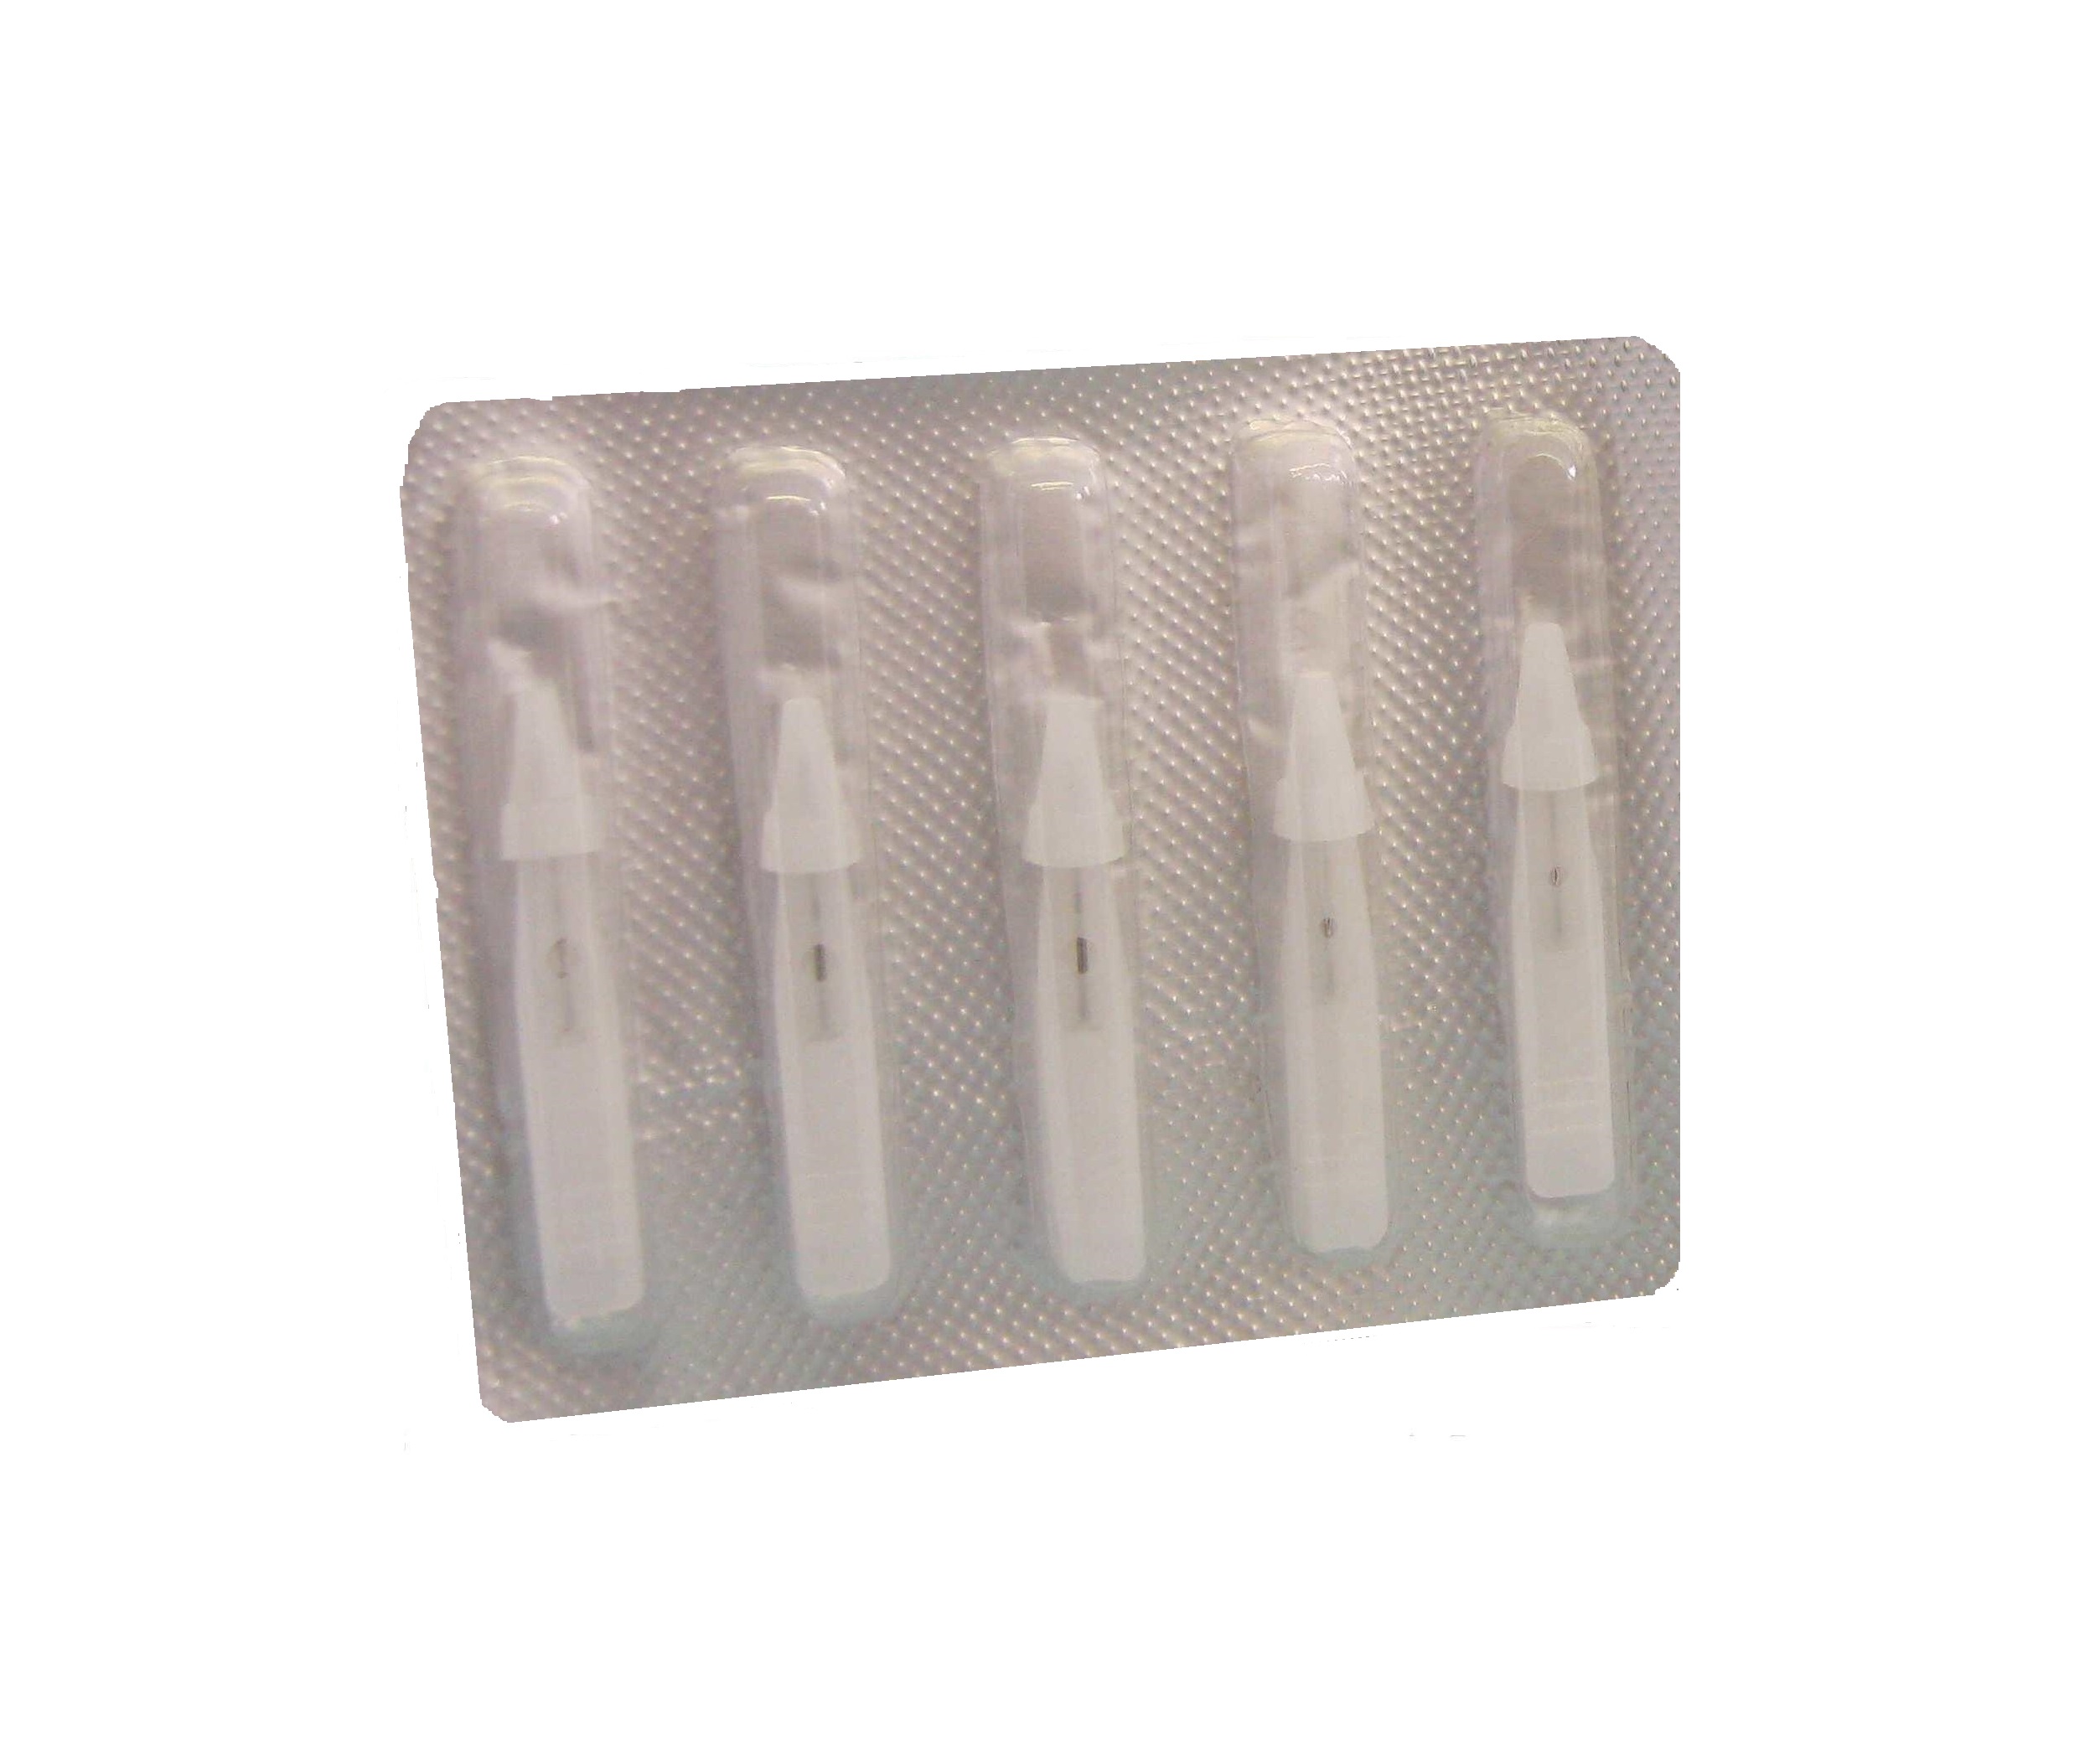 Splinter Probe 4cm Disposable Sterile - Card of 5 image 0